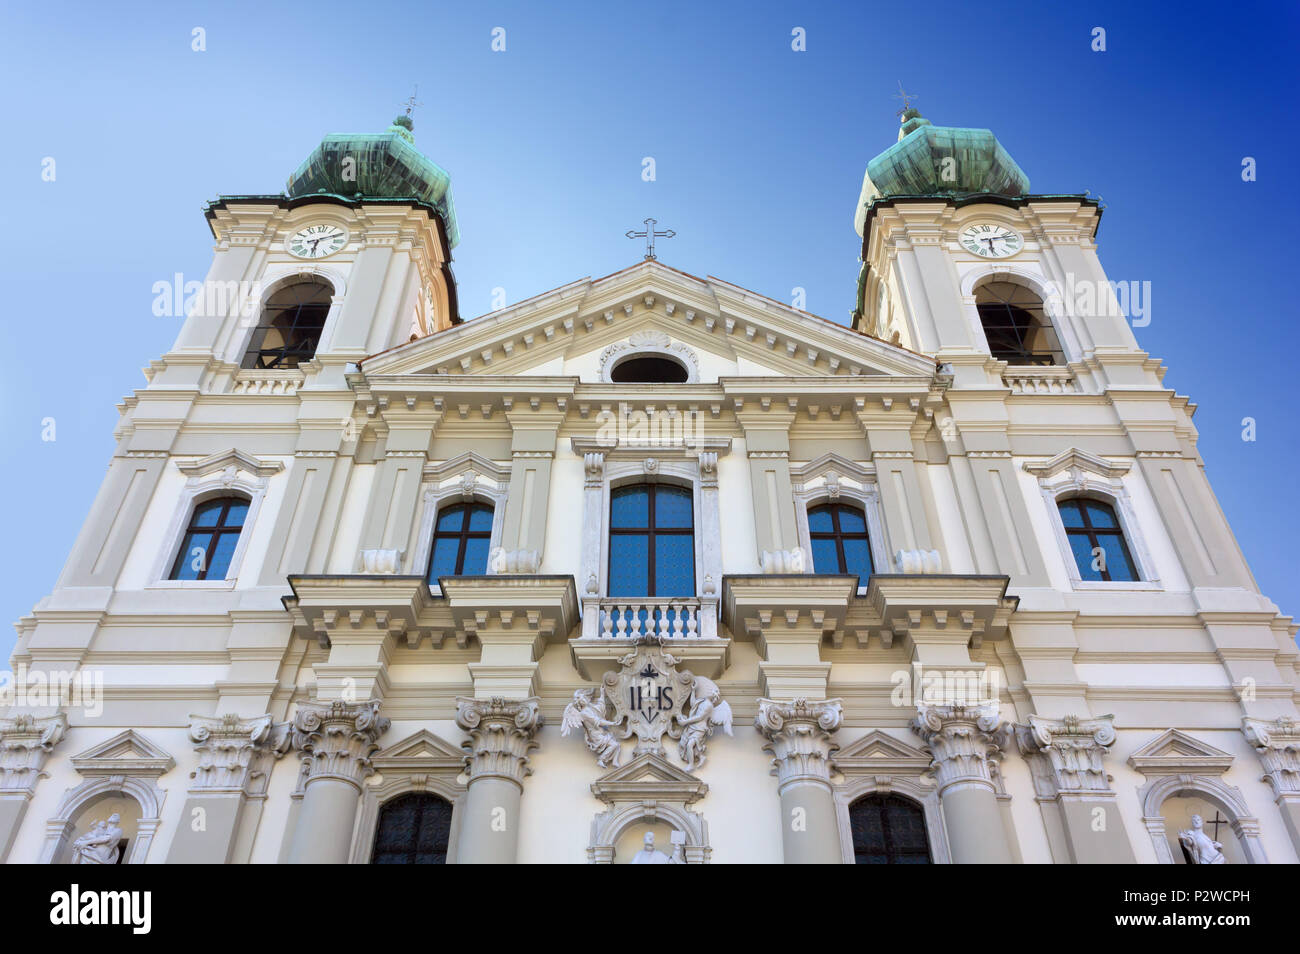 Facade of the baroque catholic church of Sant Ignazio in Gorizia, Italy Stock Photo